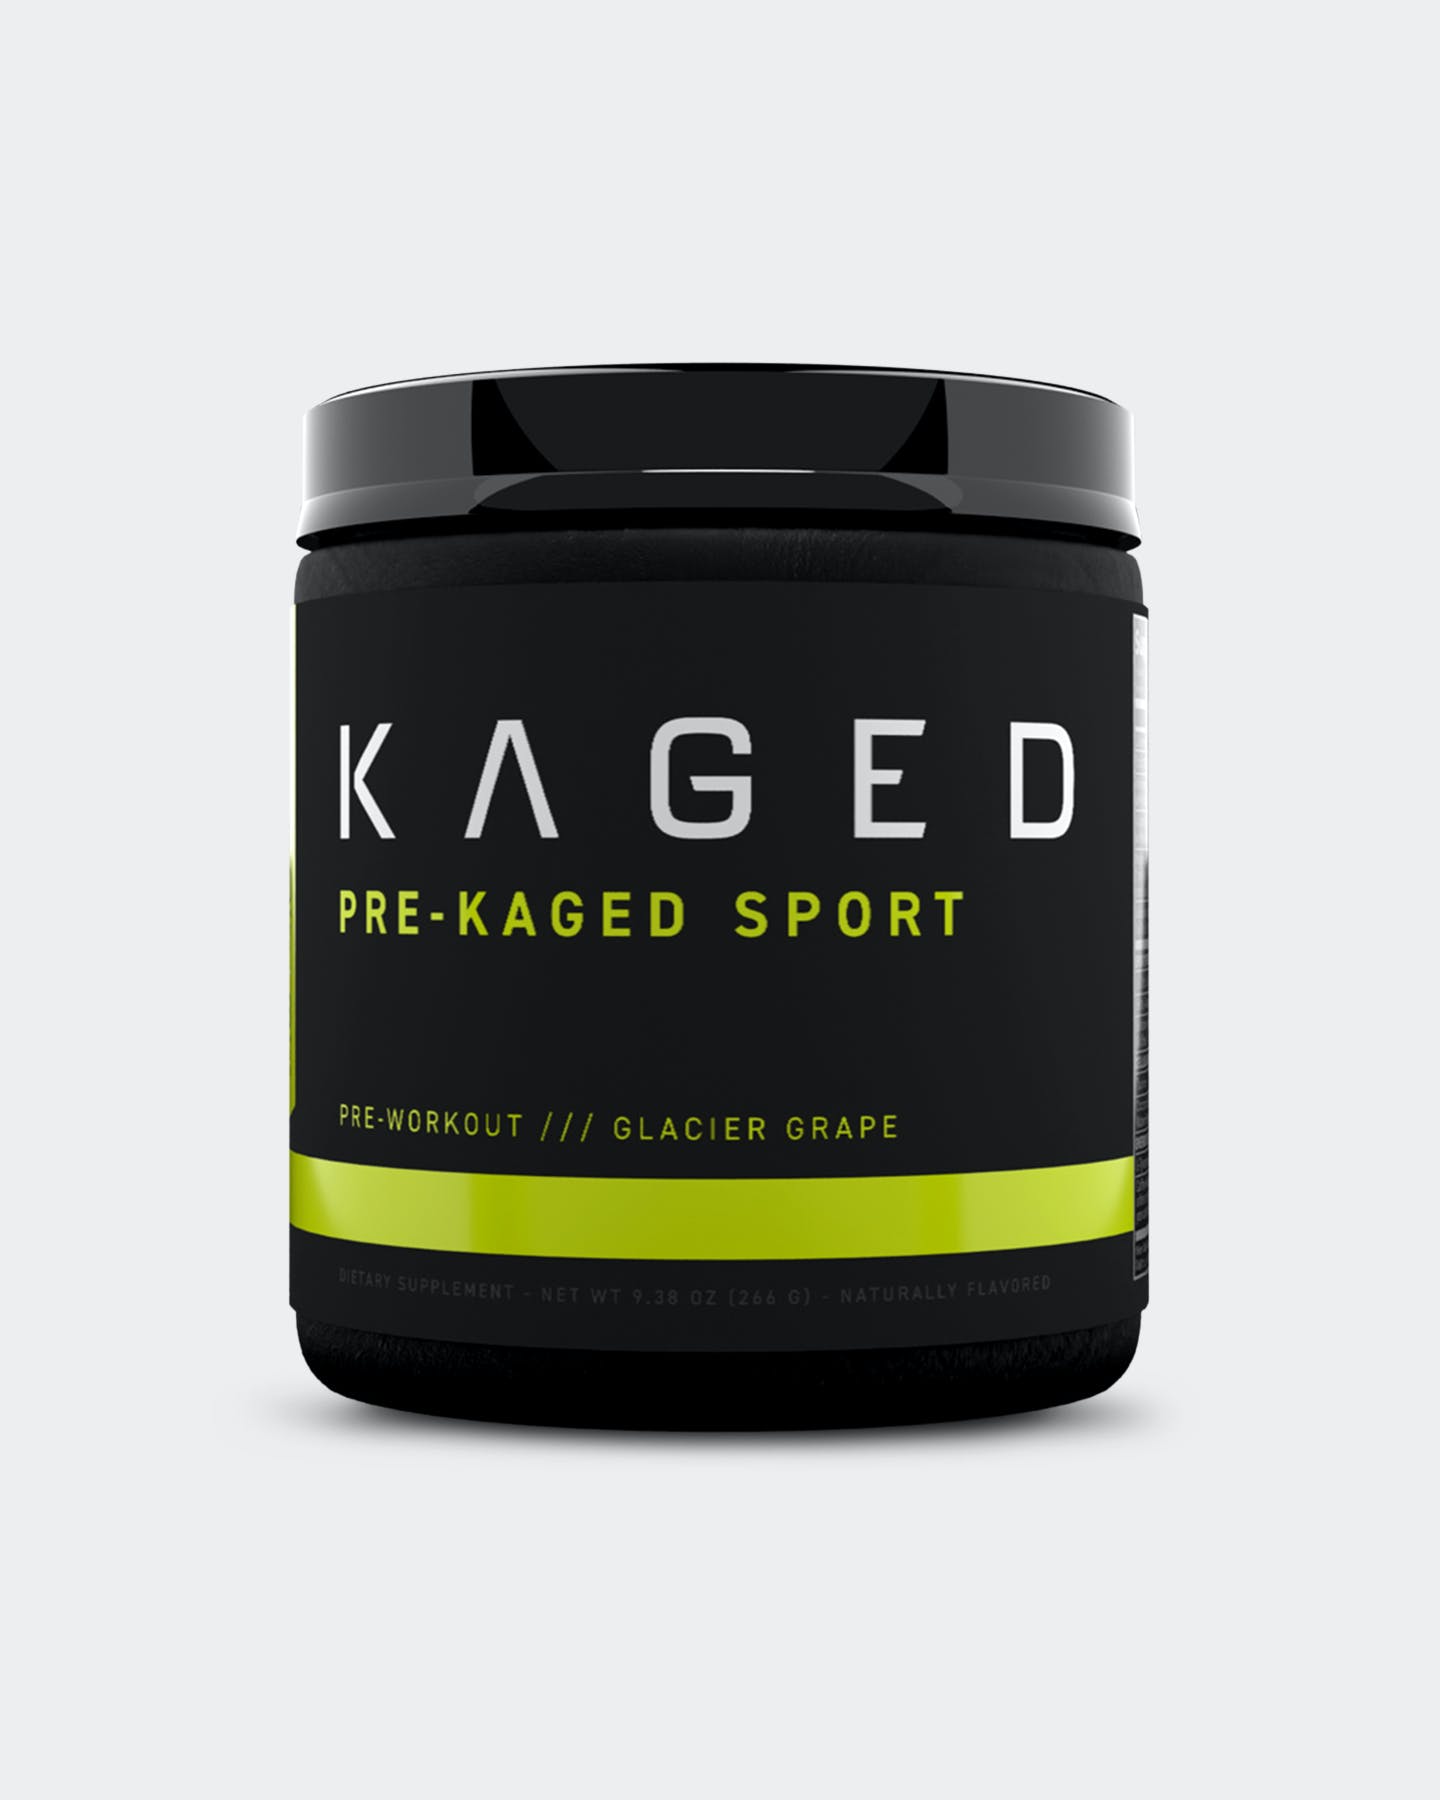 Kaged Muscle Pre-Kaged Sport, Glacier Grape, 20 Servings